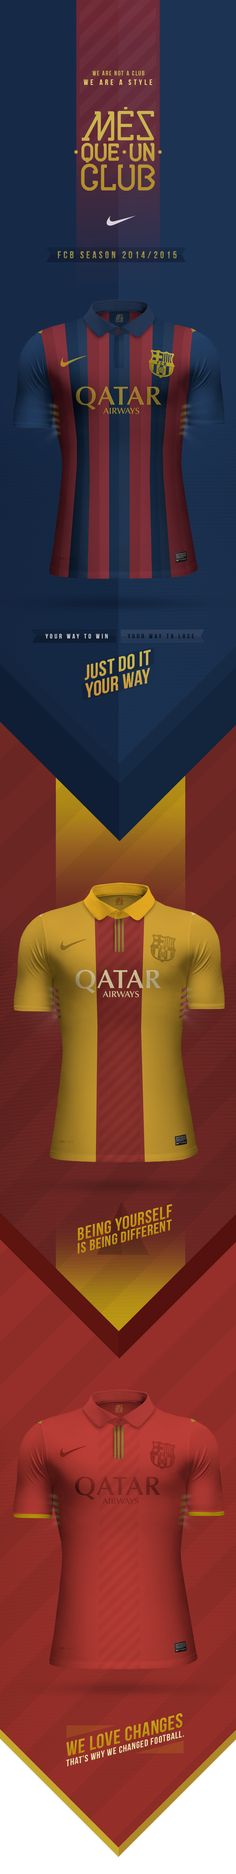 Barcelona FC - Concept on Behance